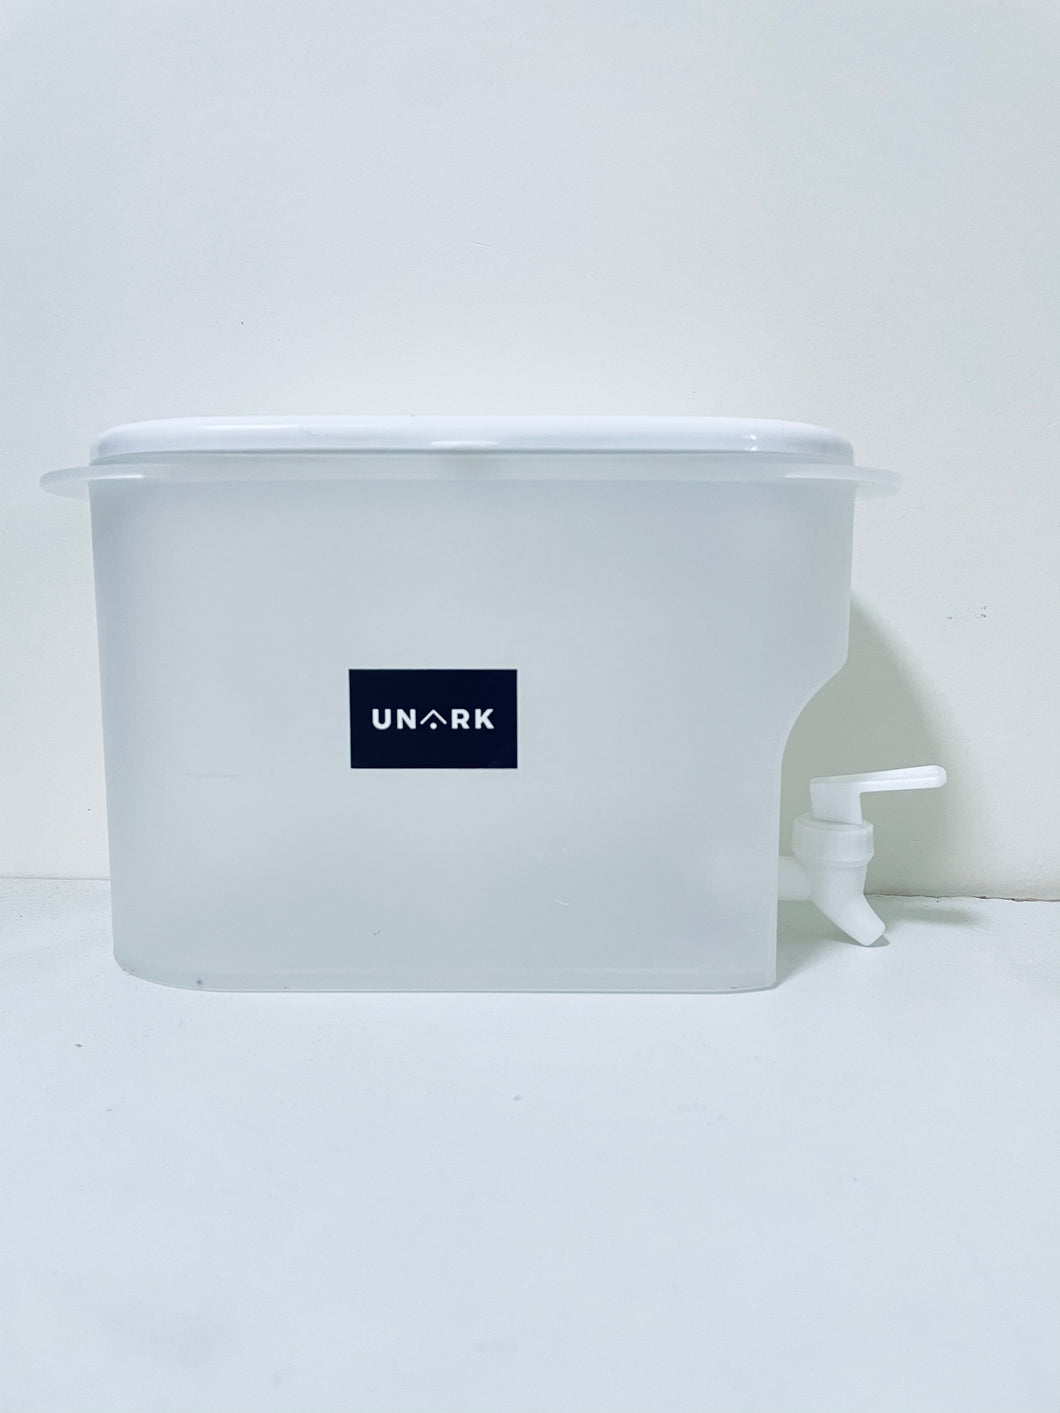 UNARK kitchen storage box,Plastic Dry Food Storage Boxes with Seal Locking Lid for Flour, Sugar, Kitchen, Pantry